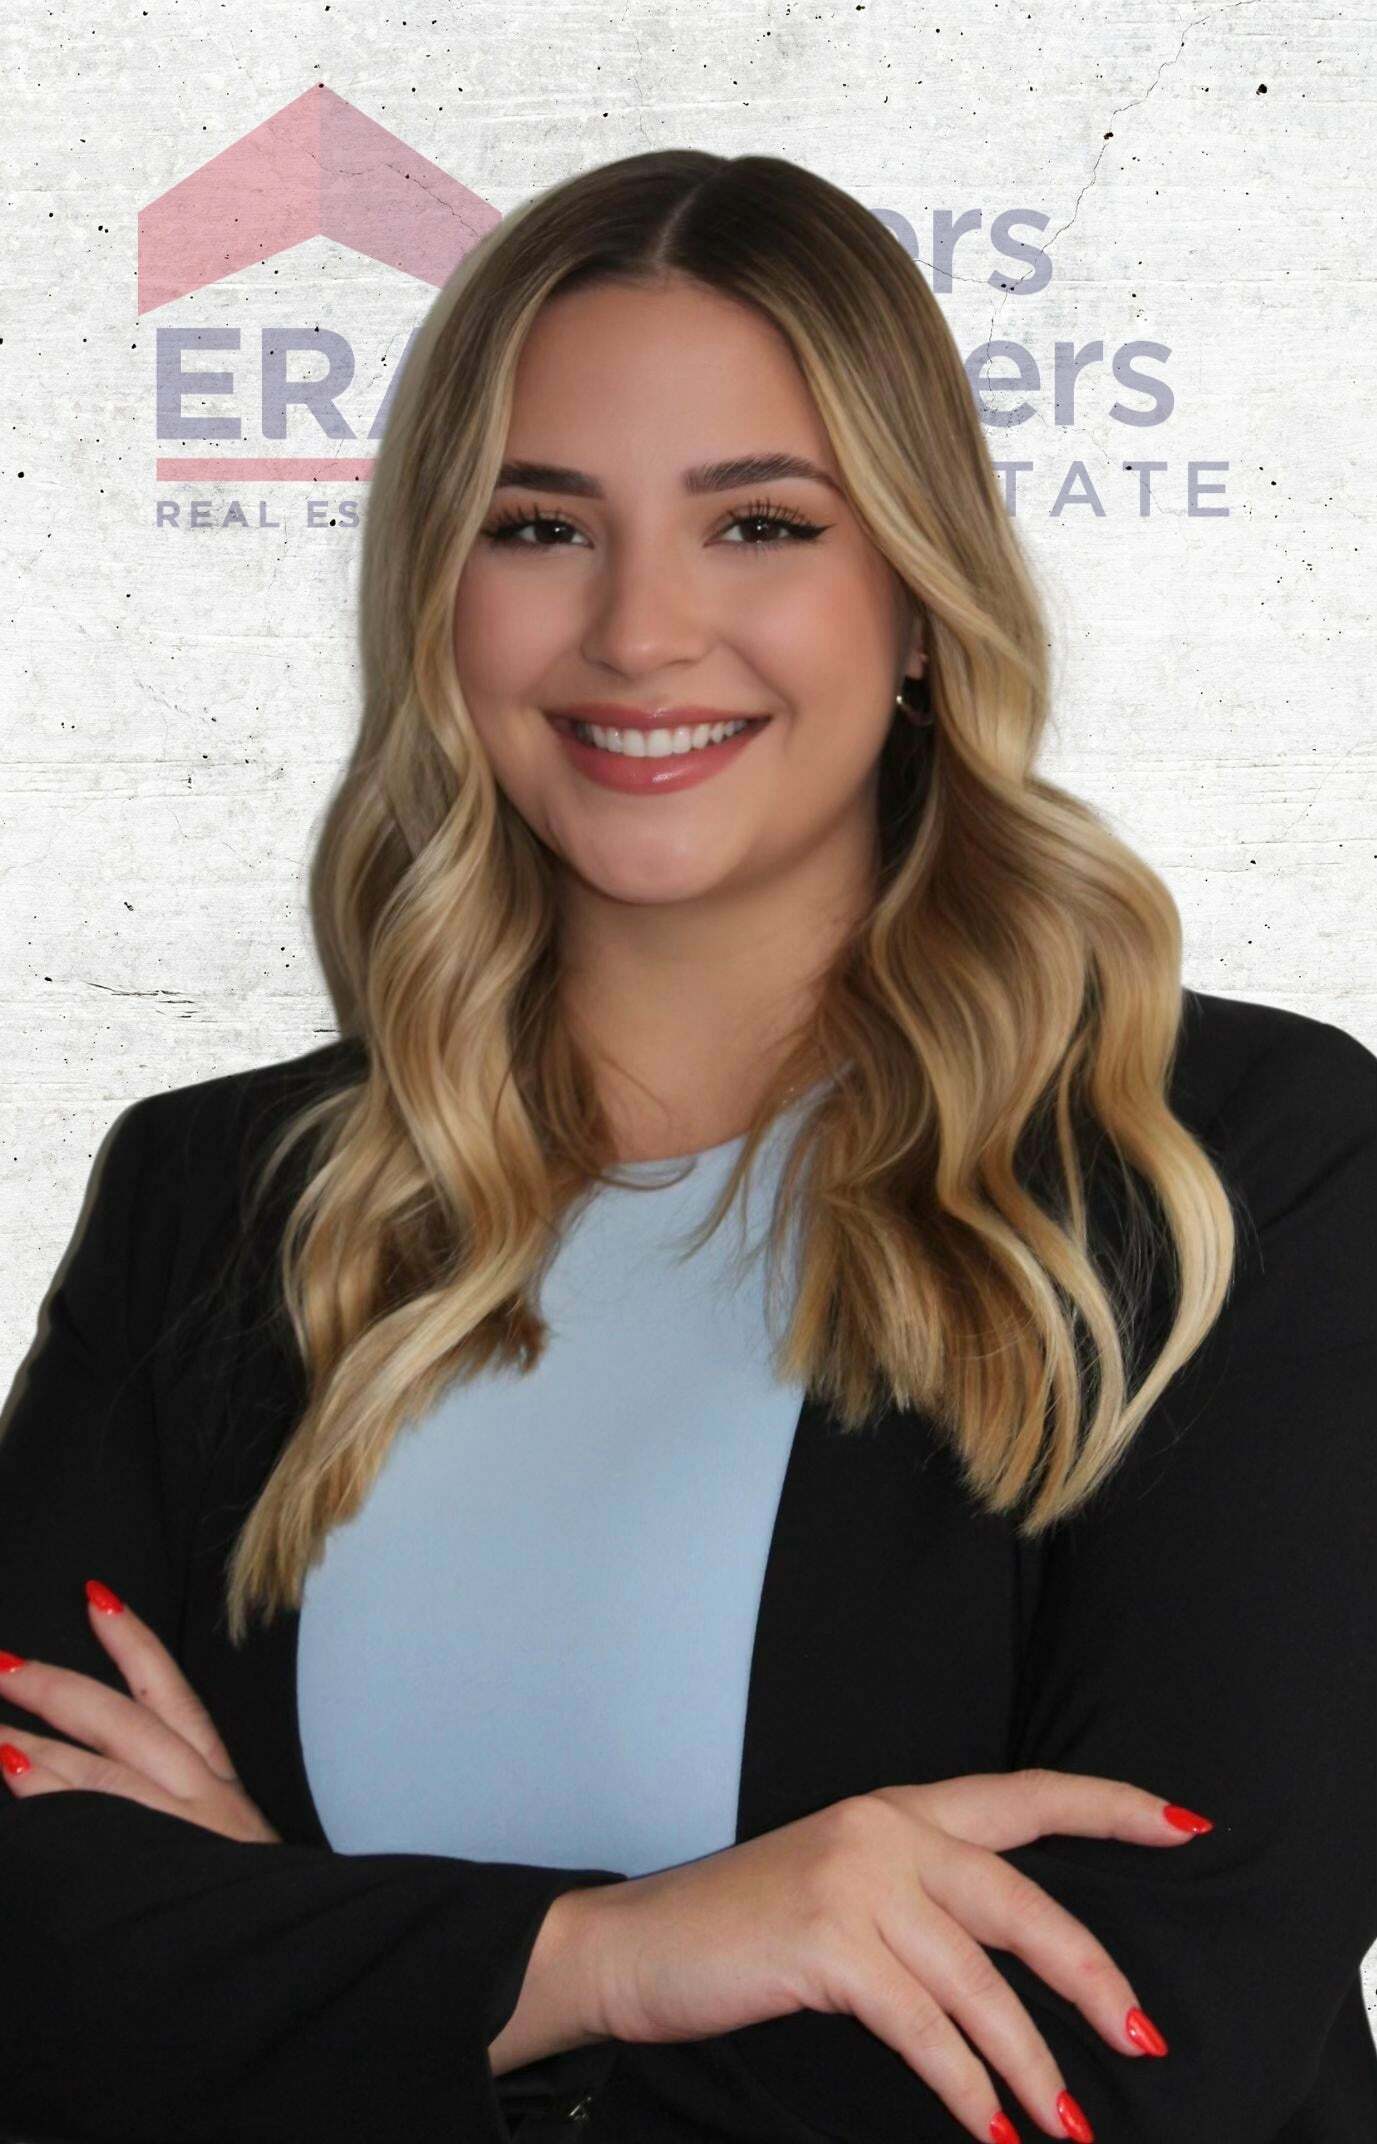 Sophia Evans, Real Estate Salesperson in El Paso, ERA Sellers & Buyers Real Estate